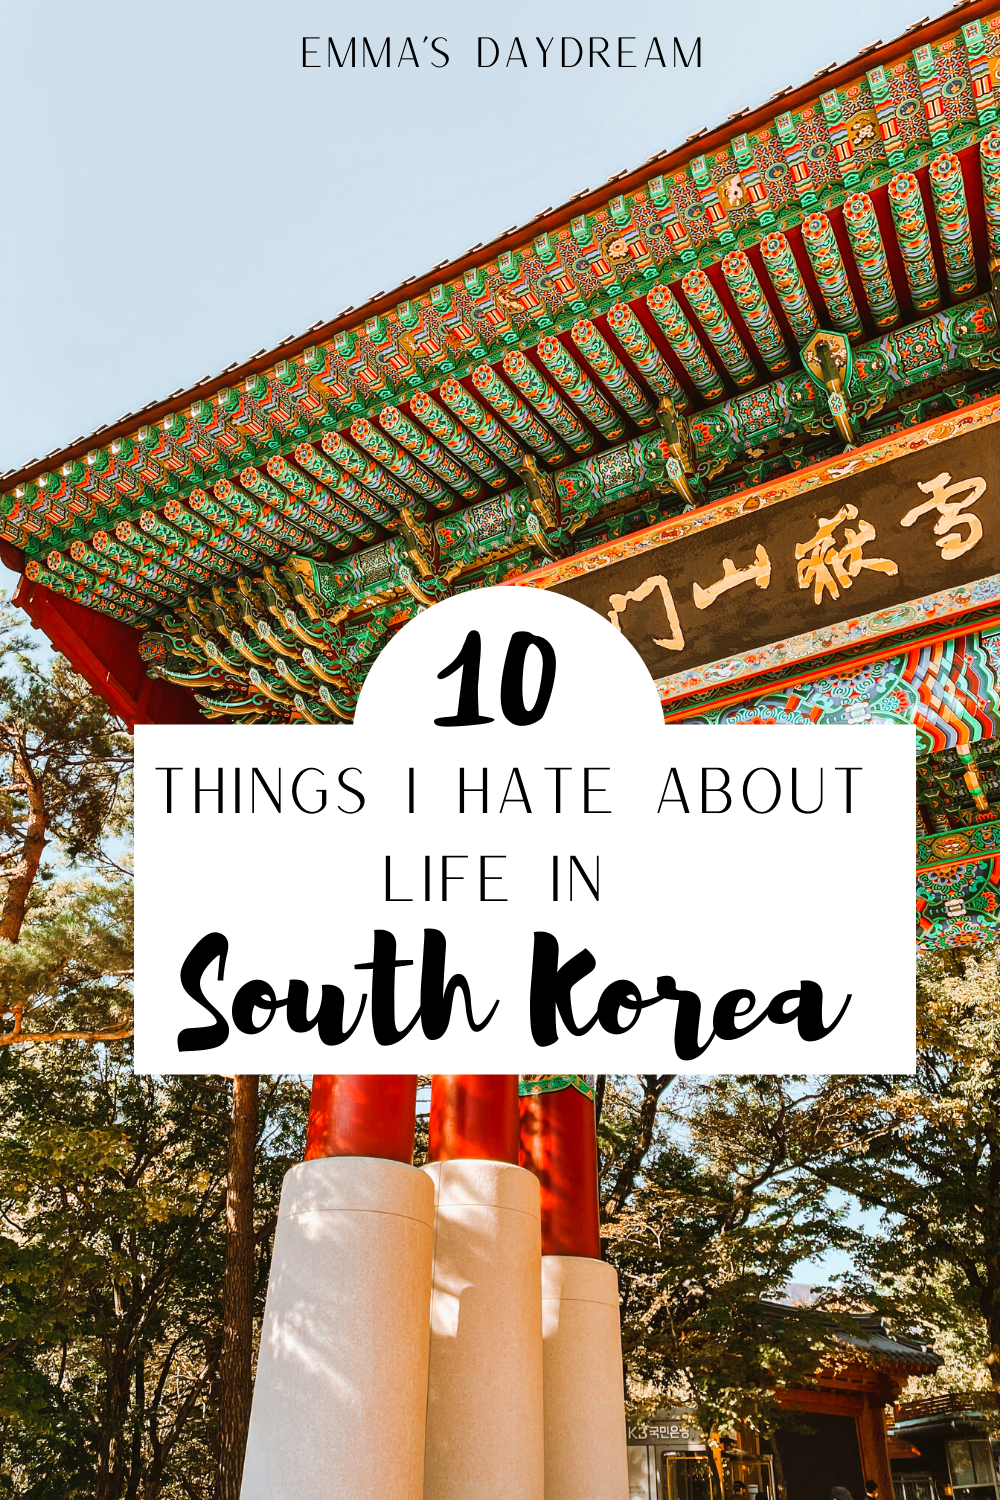 Life in South Korea